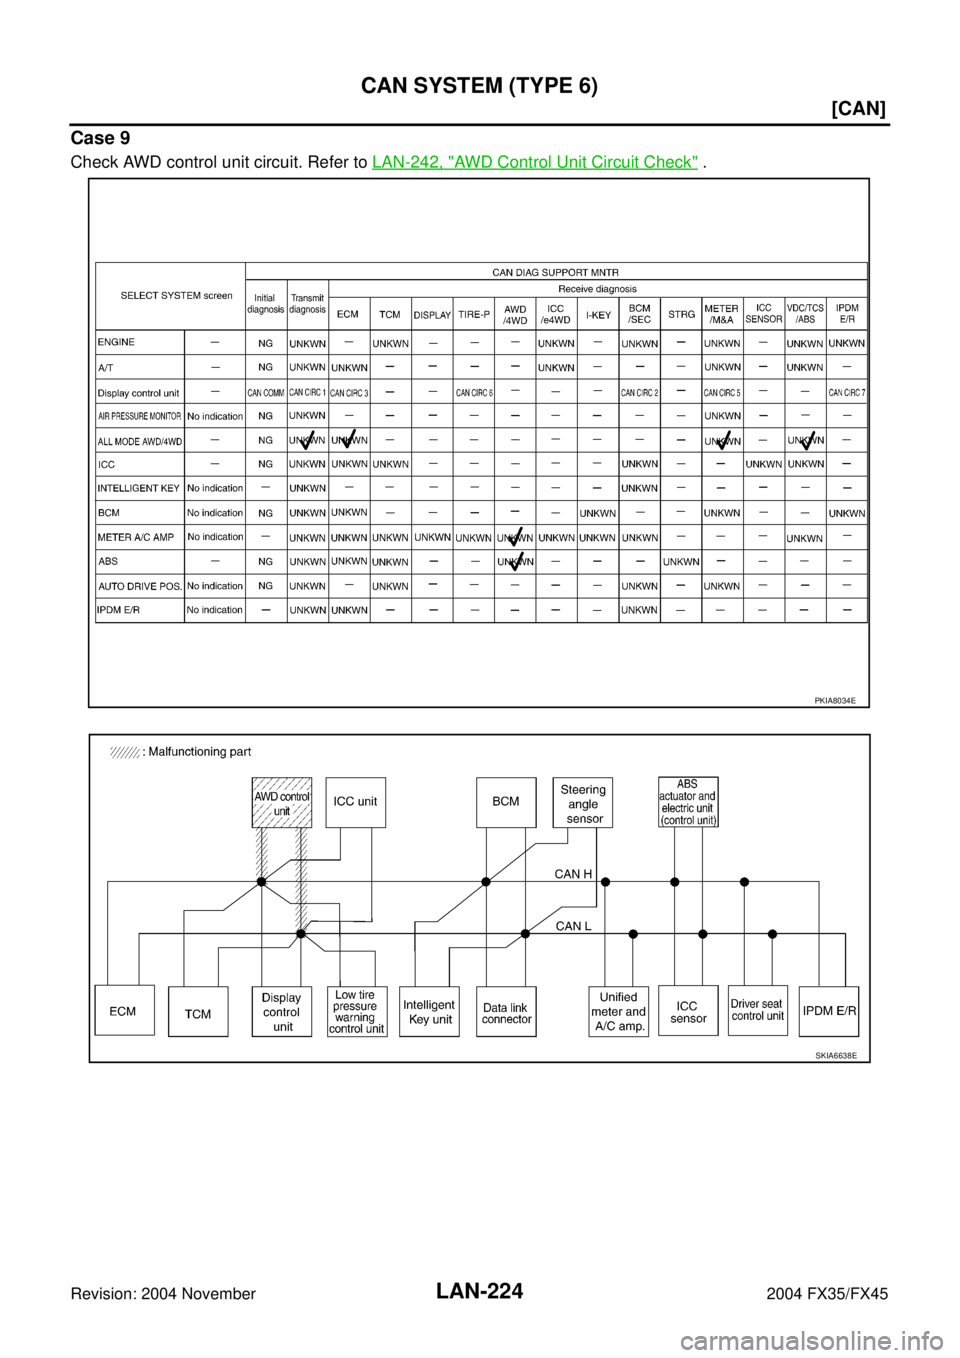 INFINITI FX35 2004  Service Manual LAN-224
[CAN]
CAN SYSTEM (TYPE 6)
Revision: 2004 November 2004 FX35/FX45
Case 9
Check AWD control unit circuit. Refer to LAN-242, "AWD Control Unit Circuit Check" .
PKIA8034E
SKIA6638E 